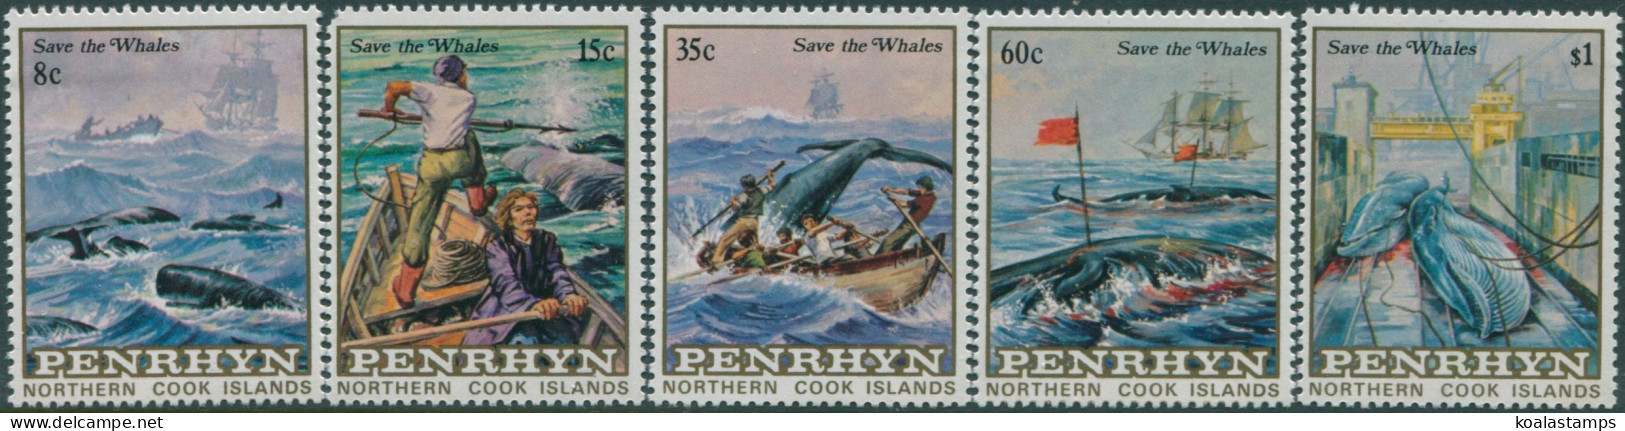 Cook Islands Penrhyn 1983 SG290-294 Whale Conservation Set MNH - Penrhyn